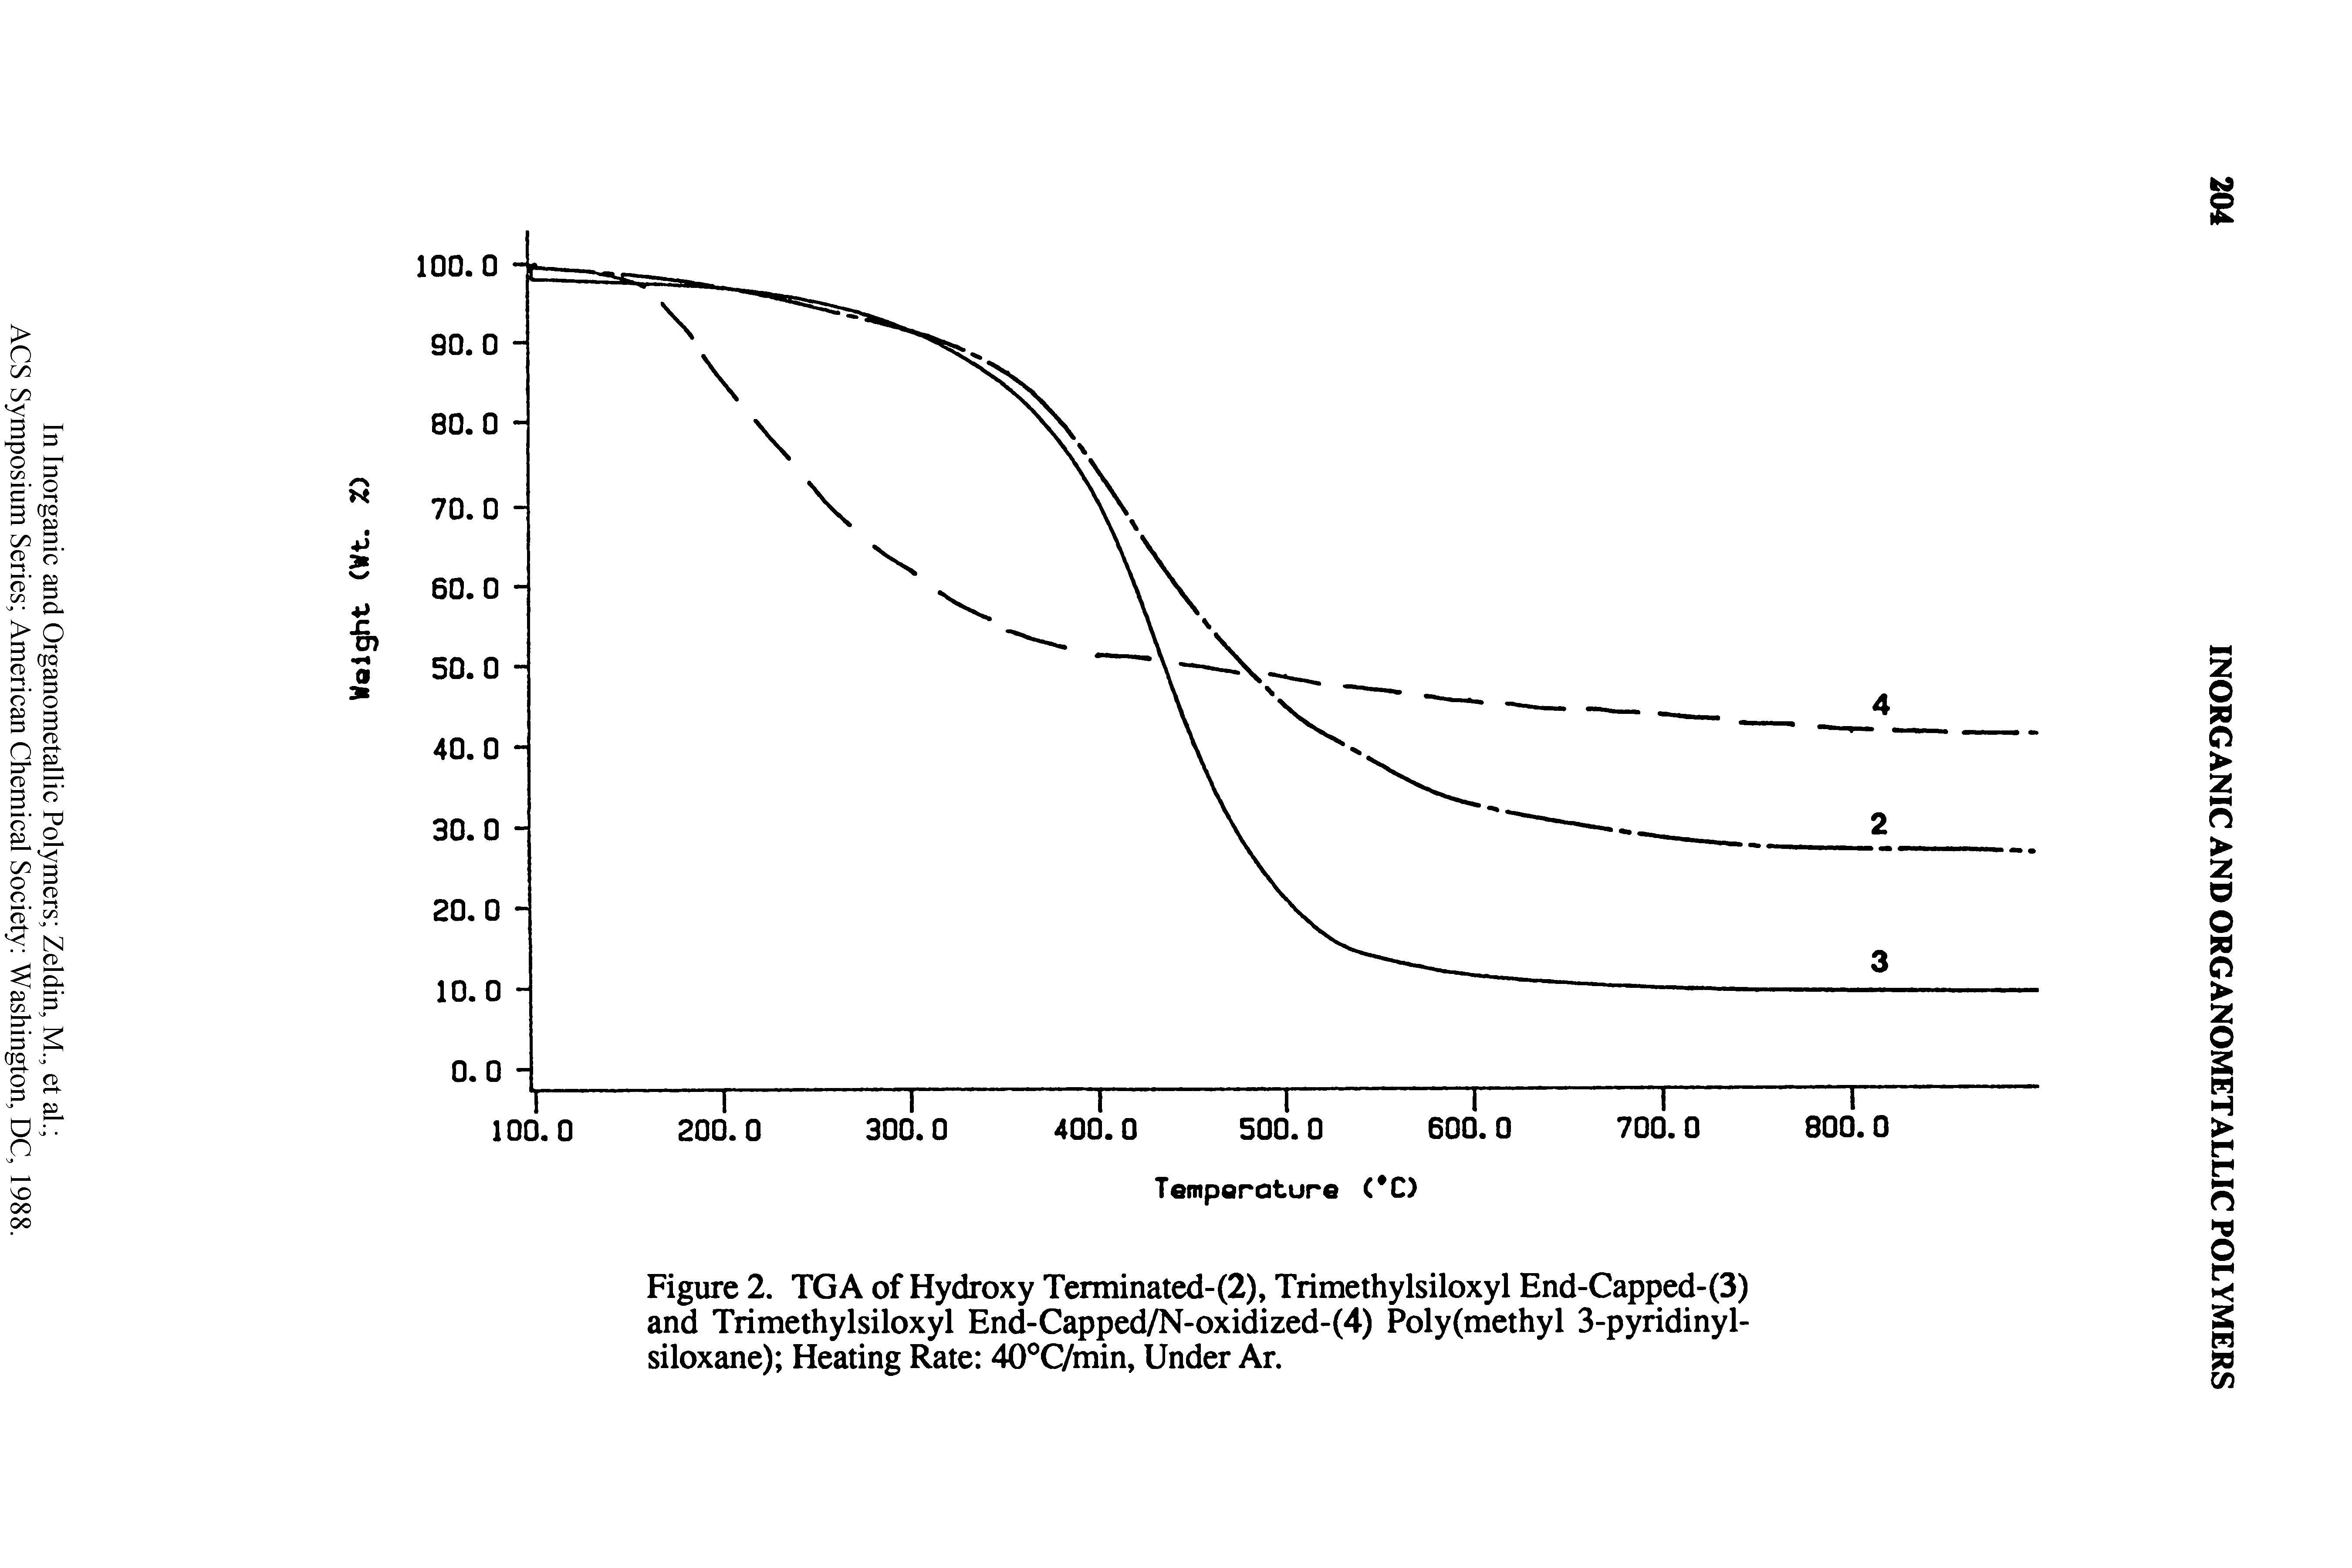 Figure 2. TGA of Hydroxy Terminated-(2), Trimethylsiloxyl End-Capped-(3) and Trimethylsiloxyl End-Capped/N-oxidized-(4) Poly(methyl 3-pyridinyl-siloxane) Heating Rate 40°C/min, Under Ar.